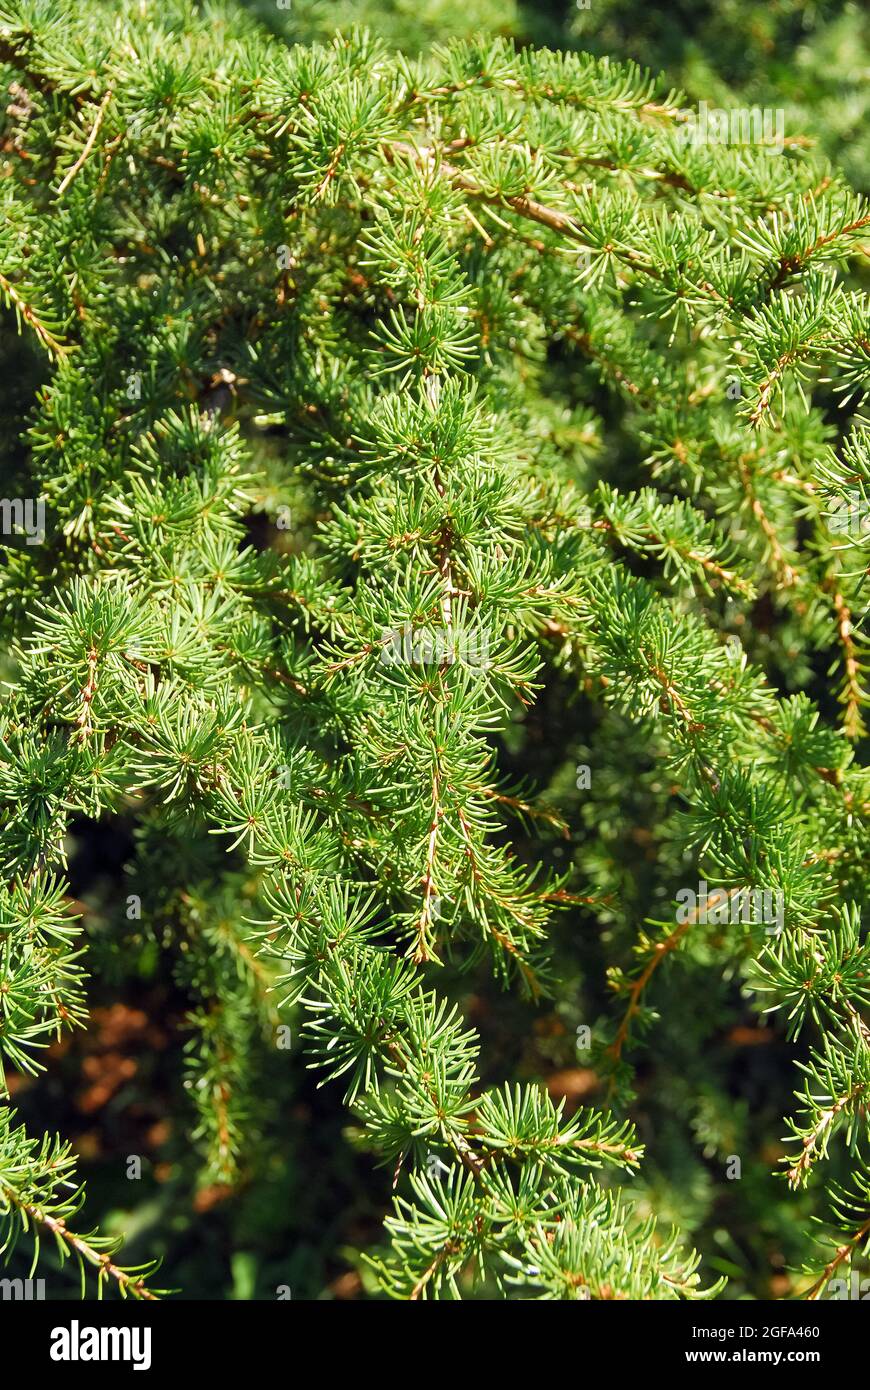 Cyprus cedar, Zypern-Zeder, Cedrus brevifolia, ciprusi cédrus Stock Photo